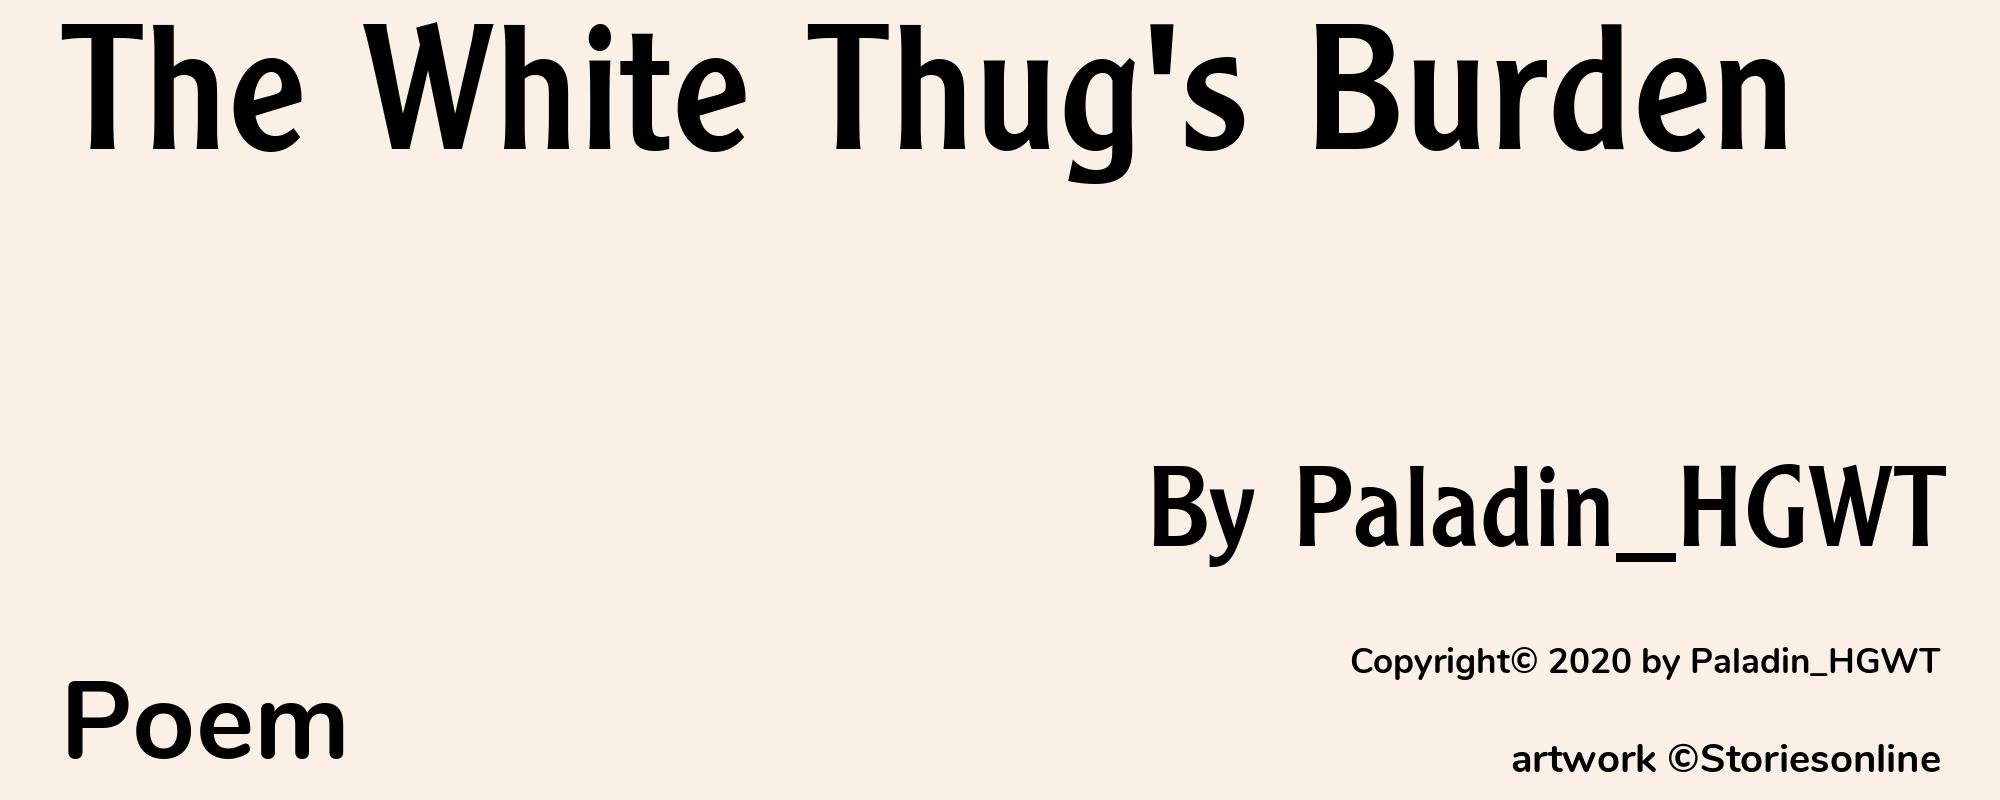 The White Thug's Burden - Cover